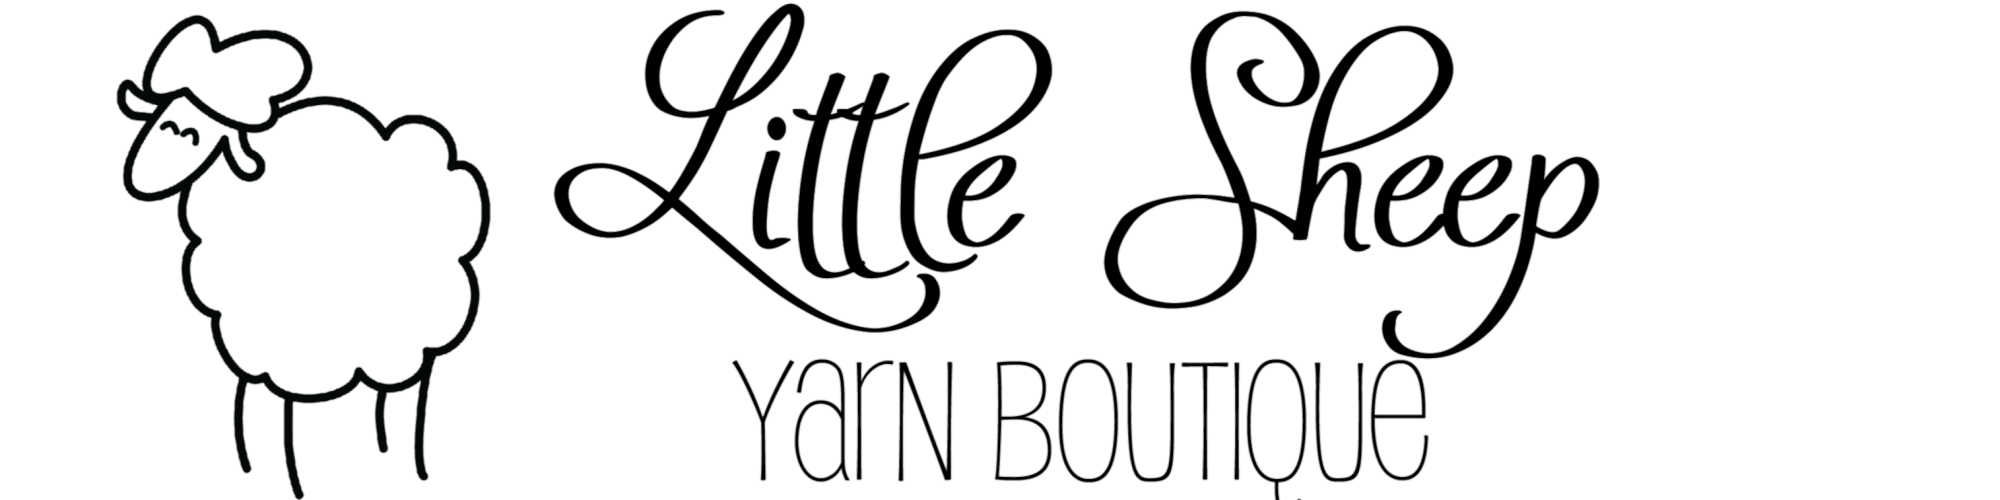 Little Sheep Yarn Boutique Logo